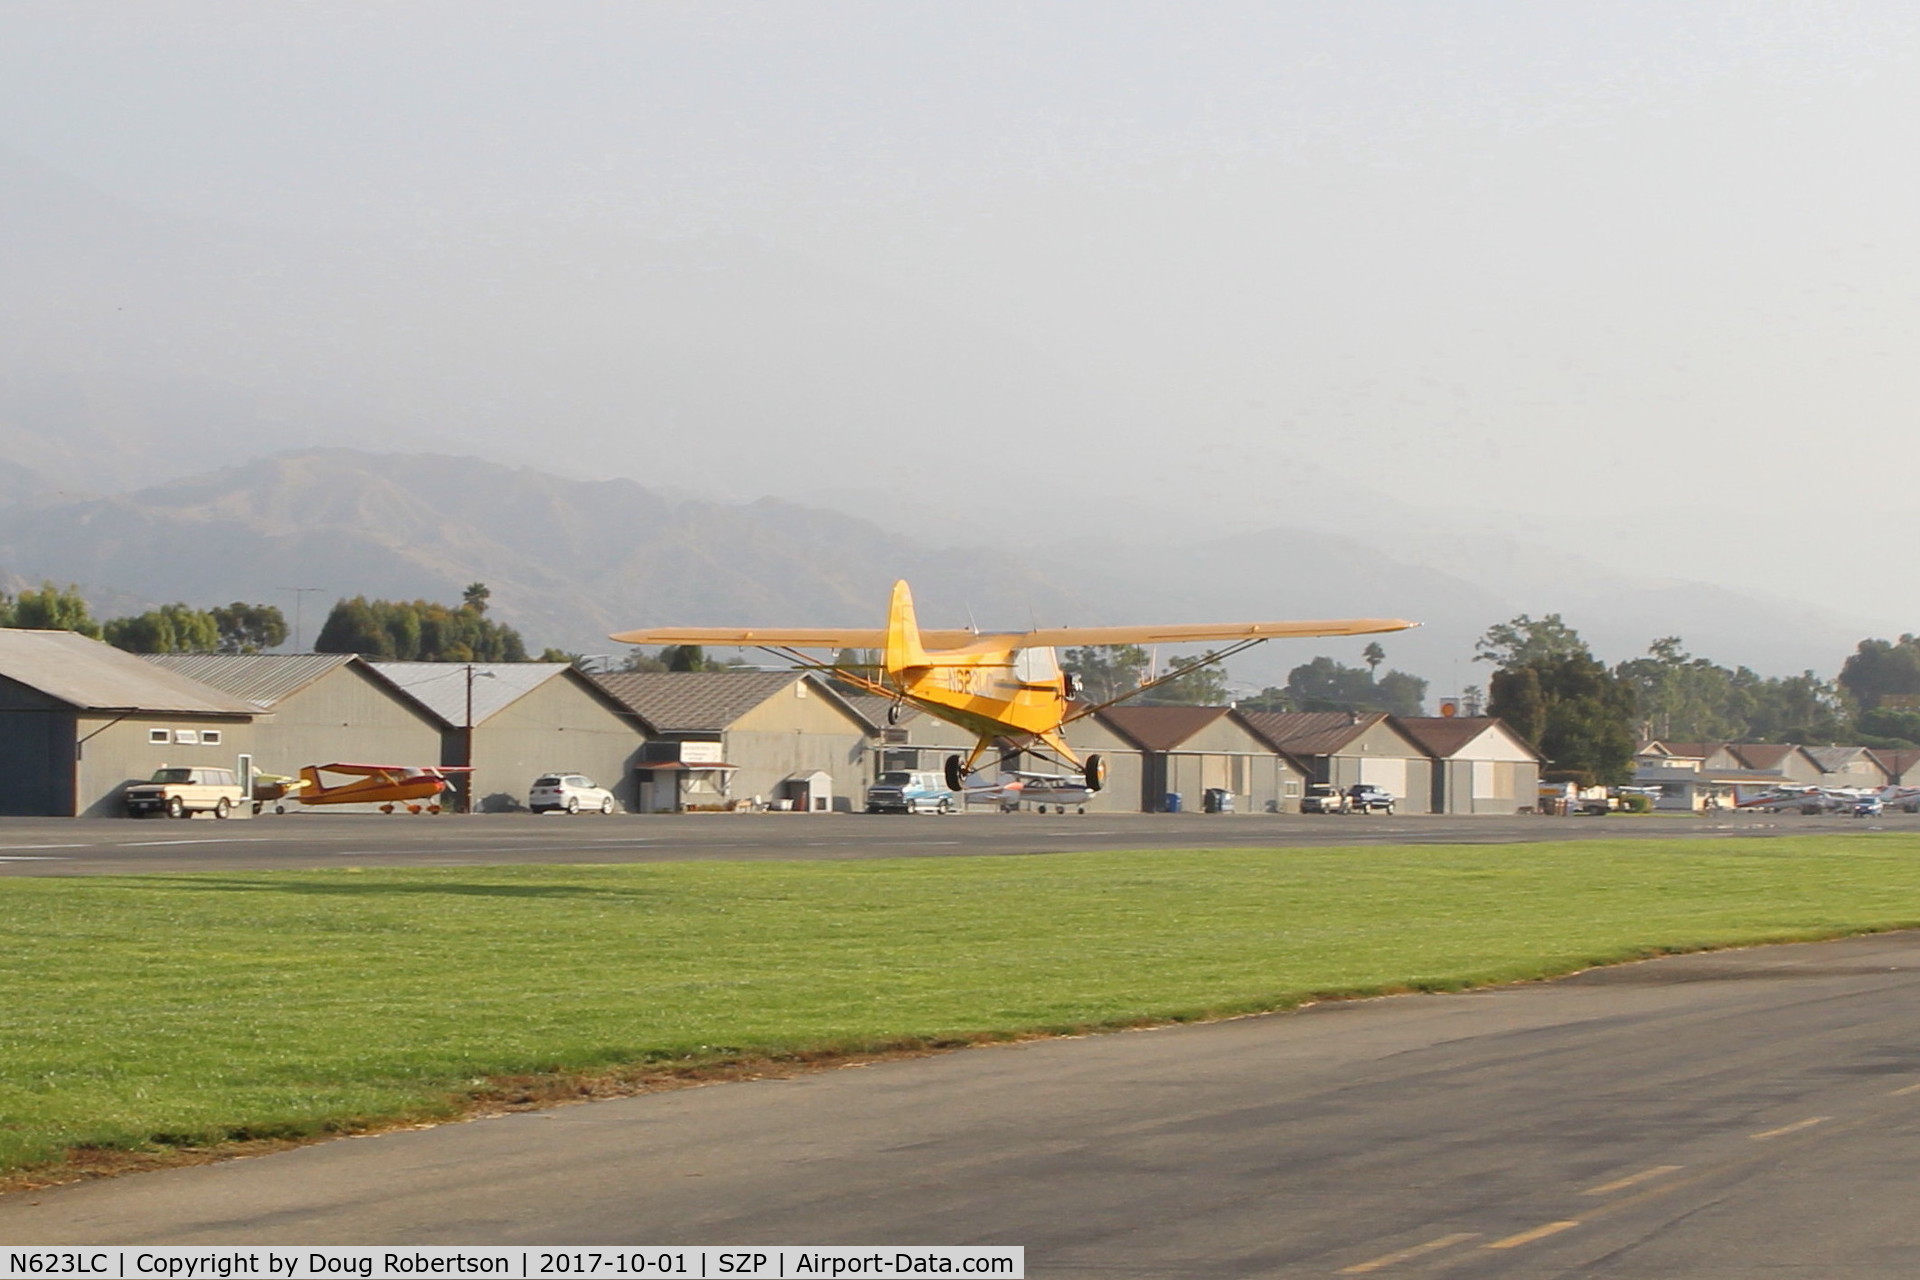 N623LC, 2006 American Legend AL3C-100 C/N AL-1024, 2006 American Legend Aircraft AL3C-100 CUB S-LSA, Continental O-200 100 Hp, landing on 04R grass. Alaska re-visitor